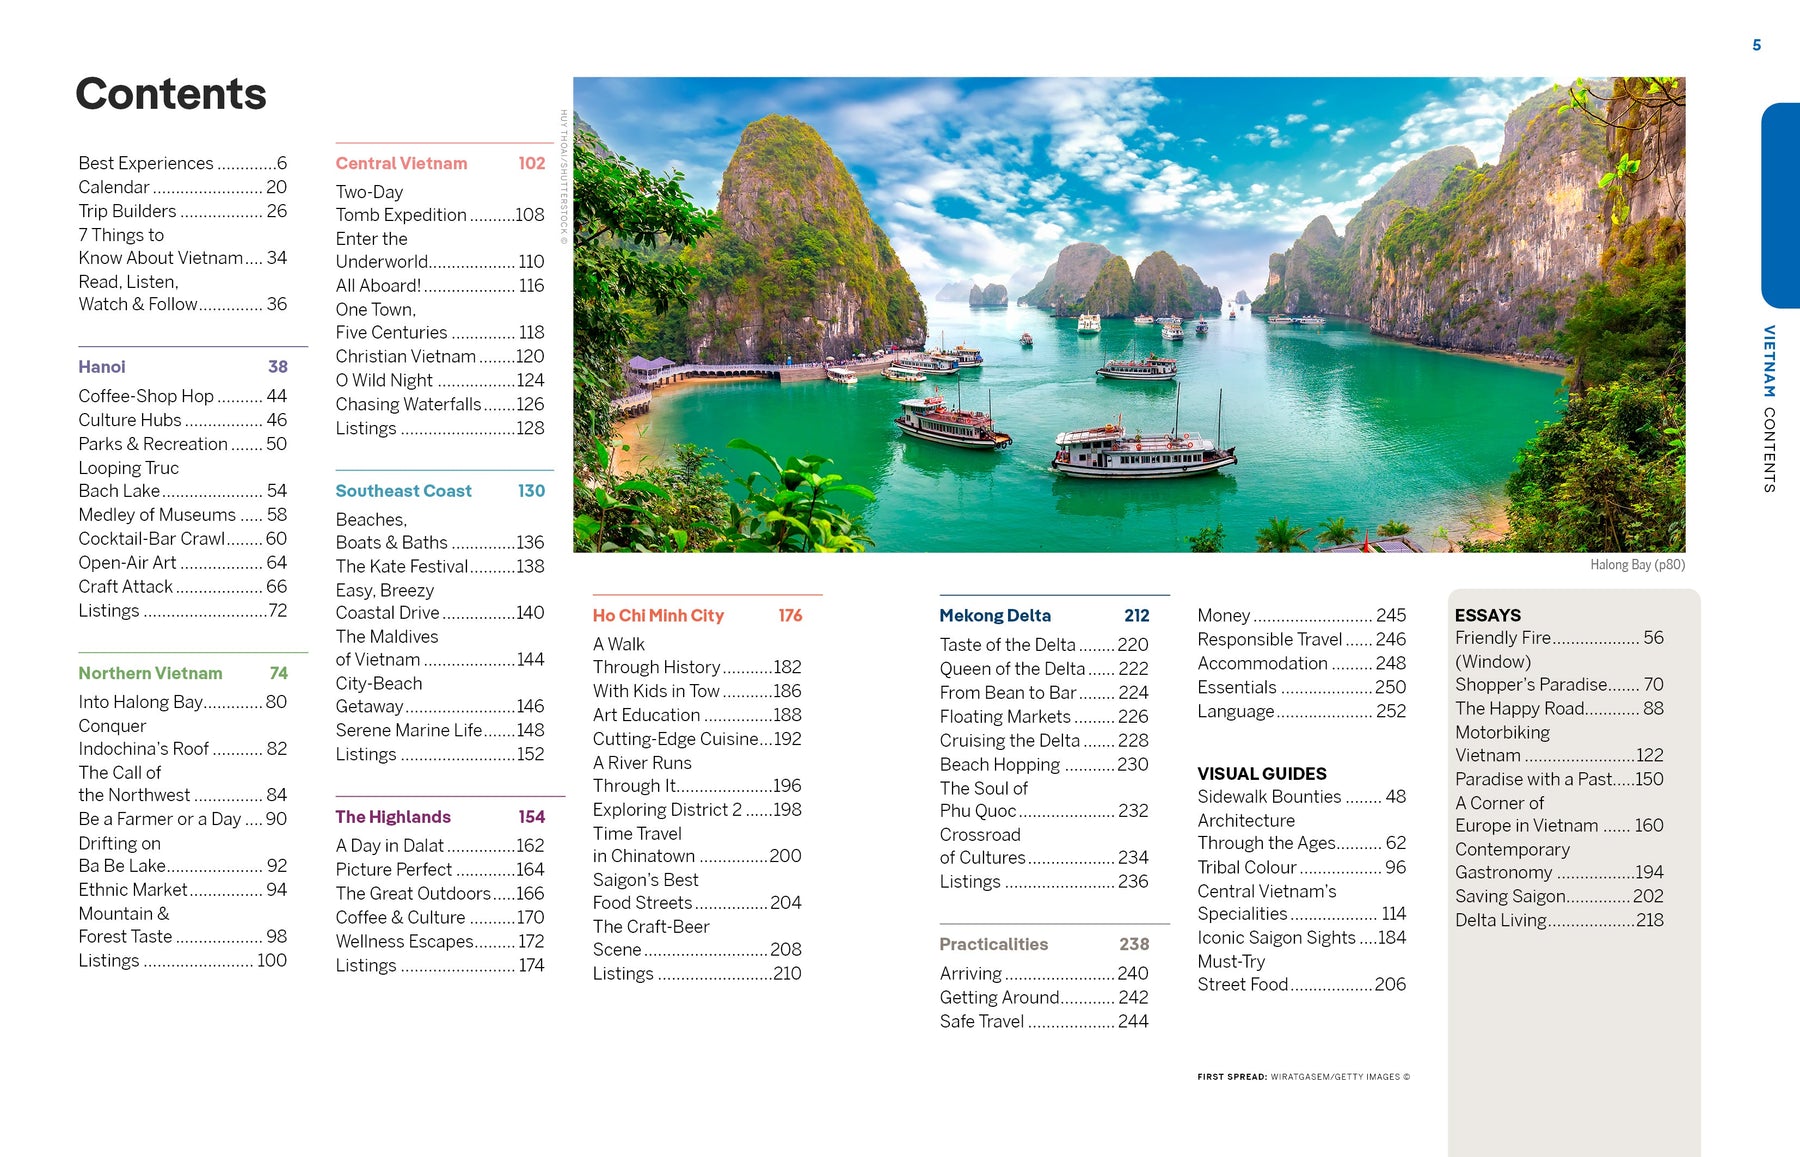 Vietnam Culture, Customs & Traditions of Vietnam - Vietnam Travel Guides